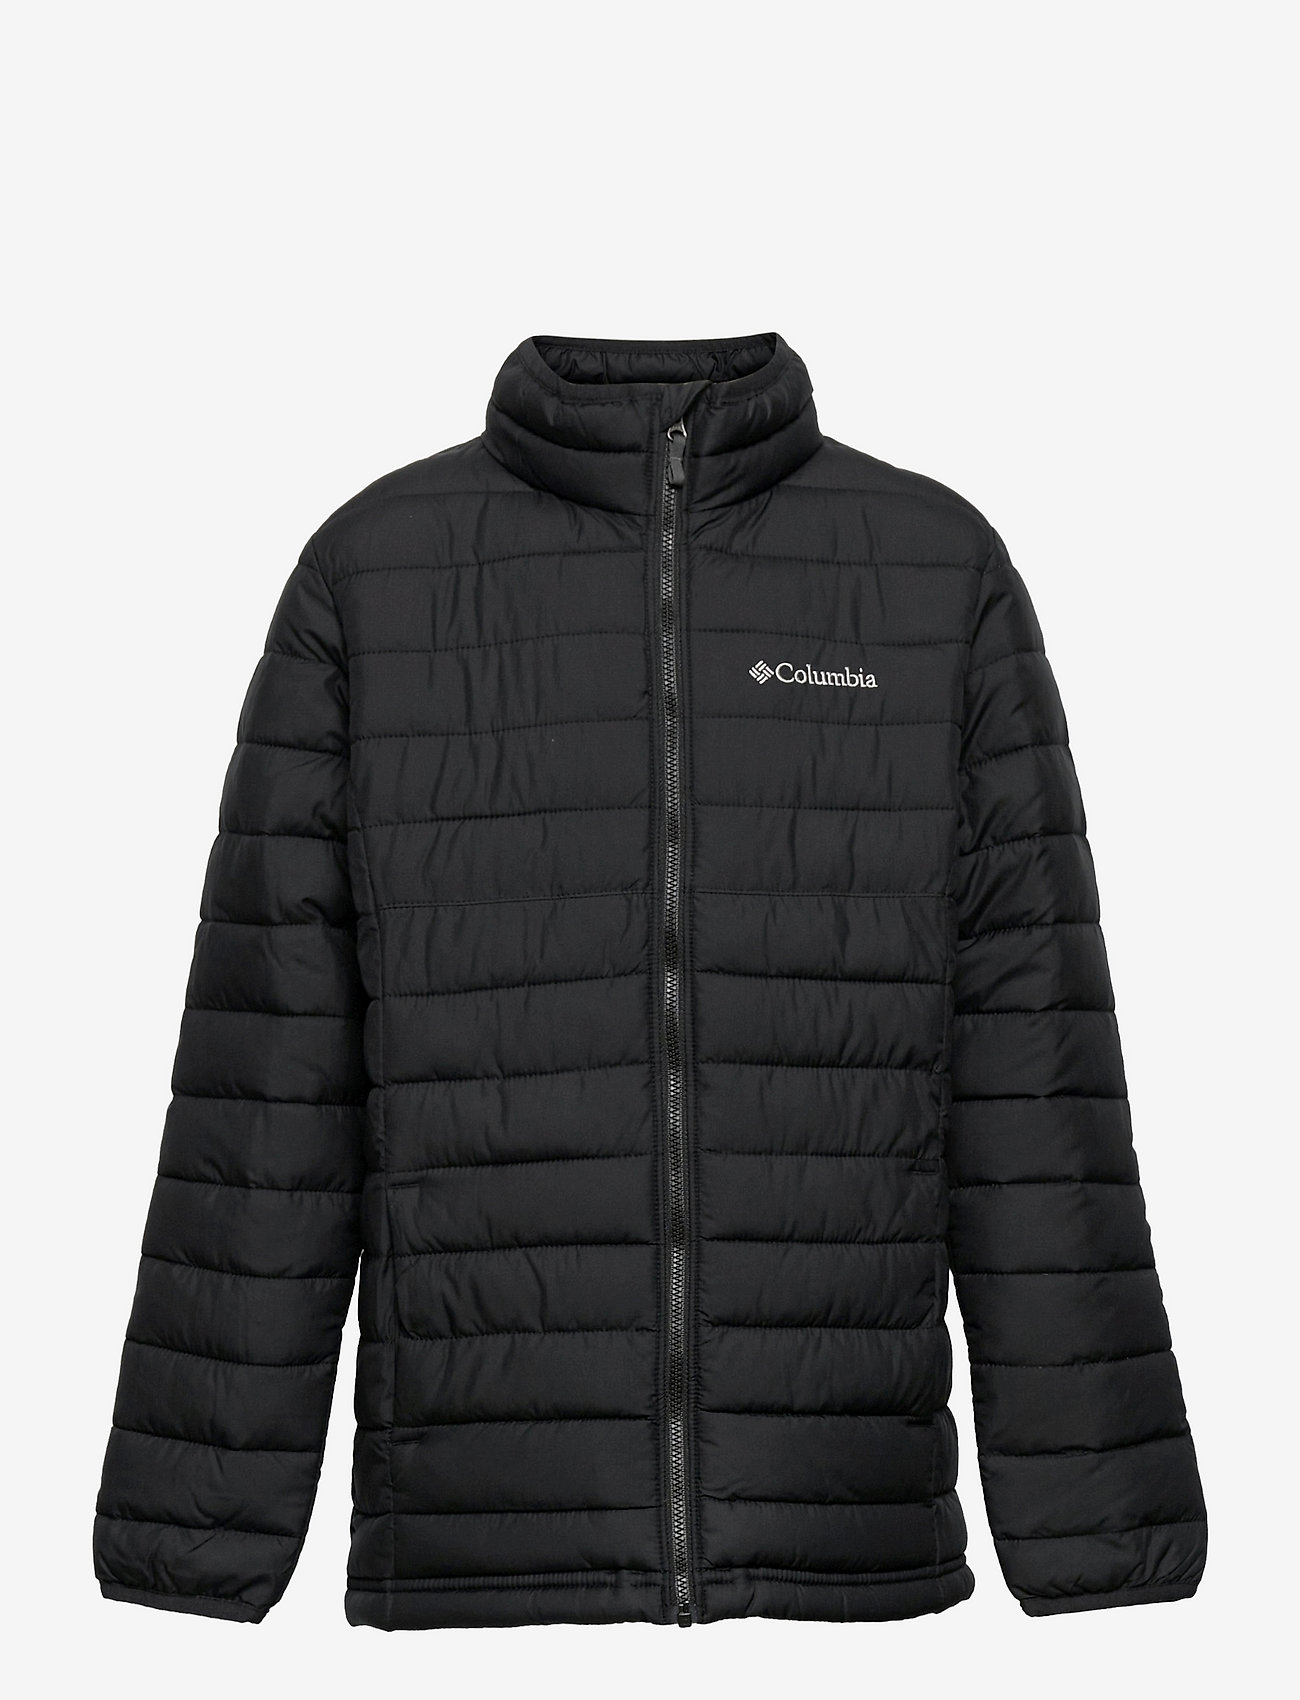 Columbia Sportswear - Powder Lite Boys Jacket - insulated jackets - black - 0